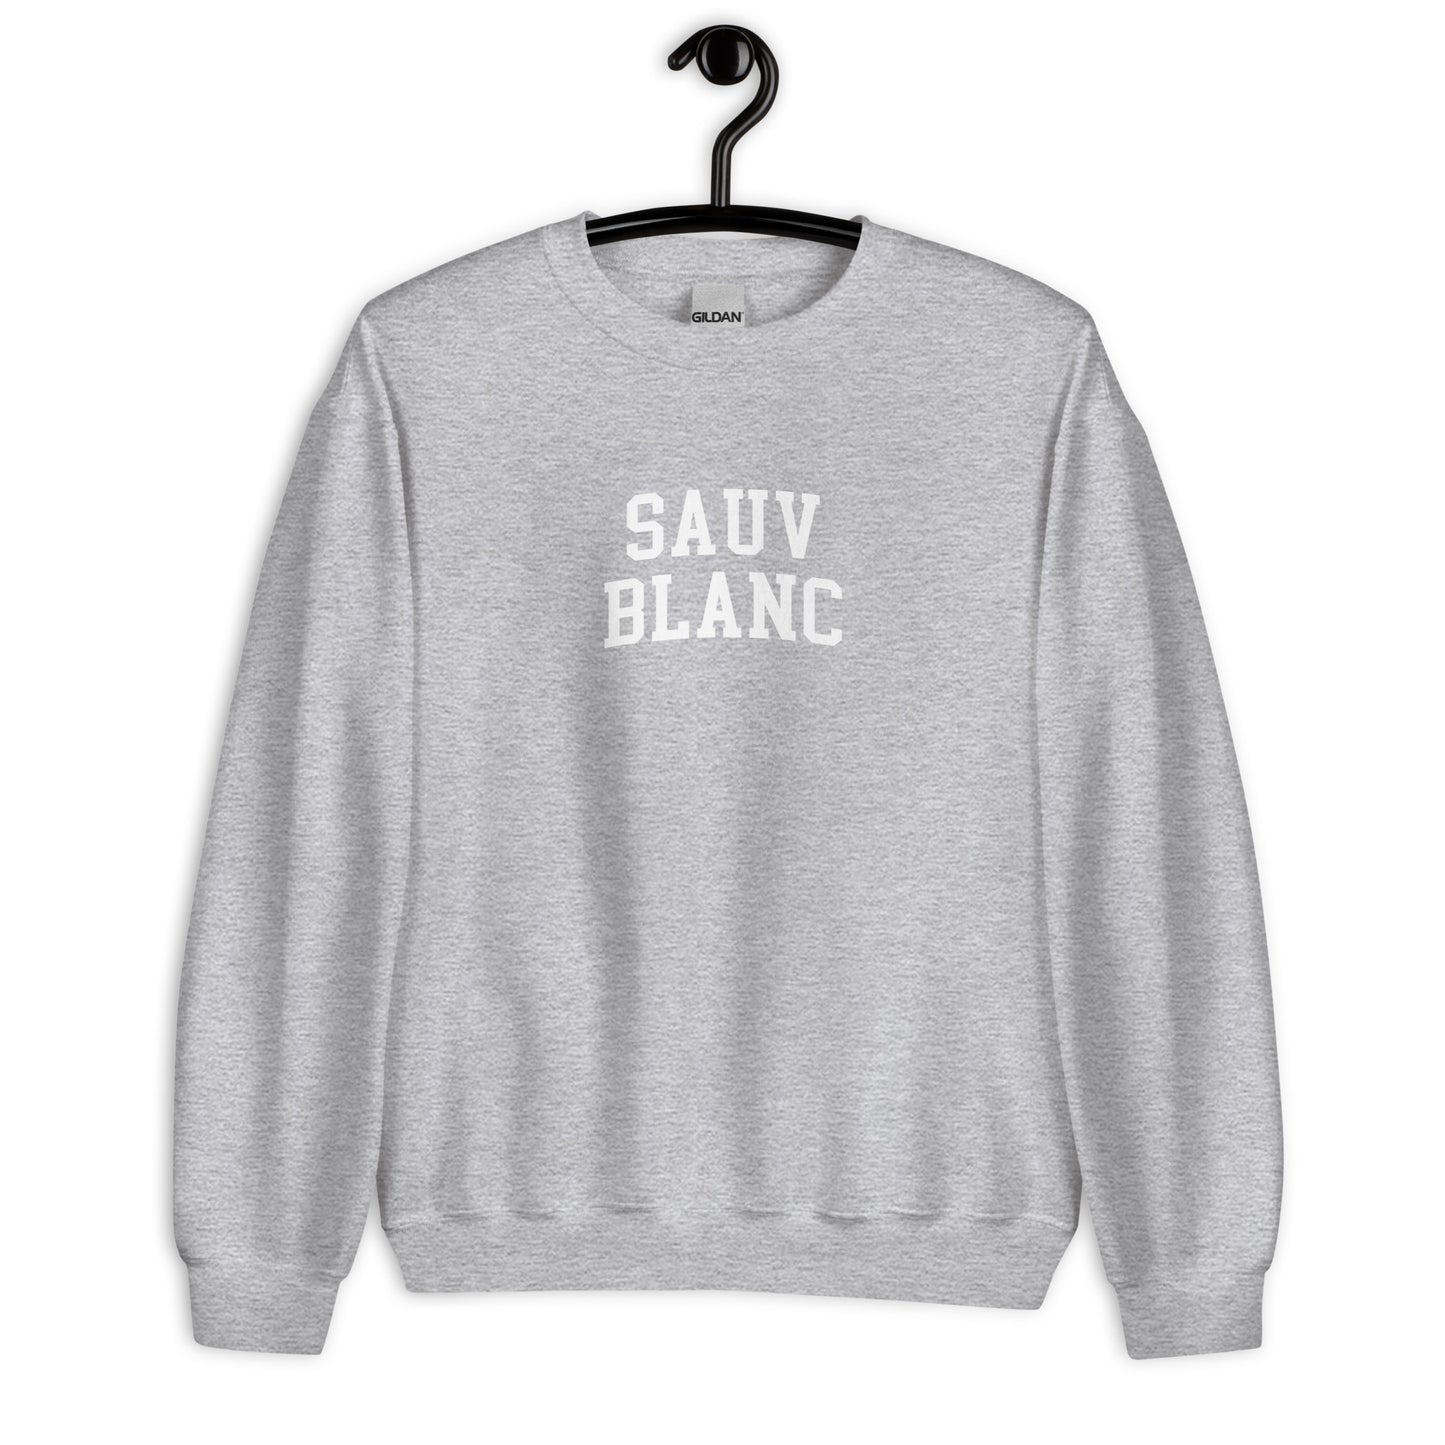 Sauv Blanc Sweatshirt - Arched Font